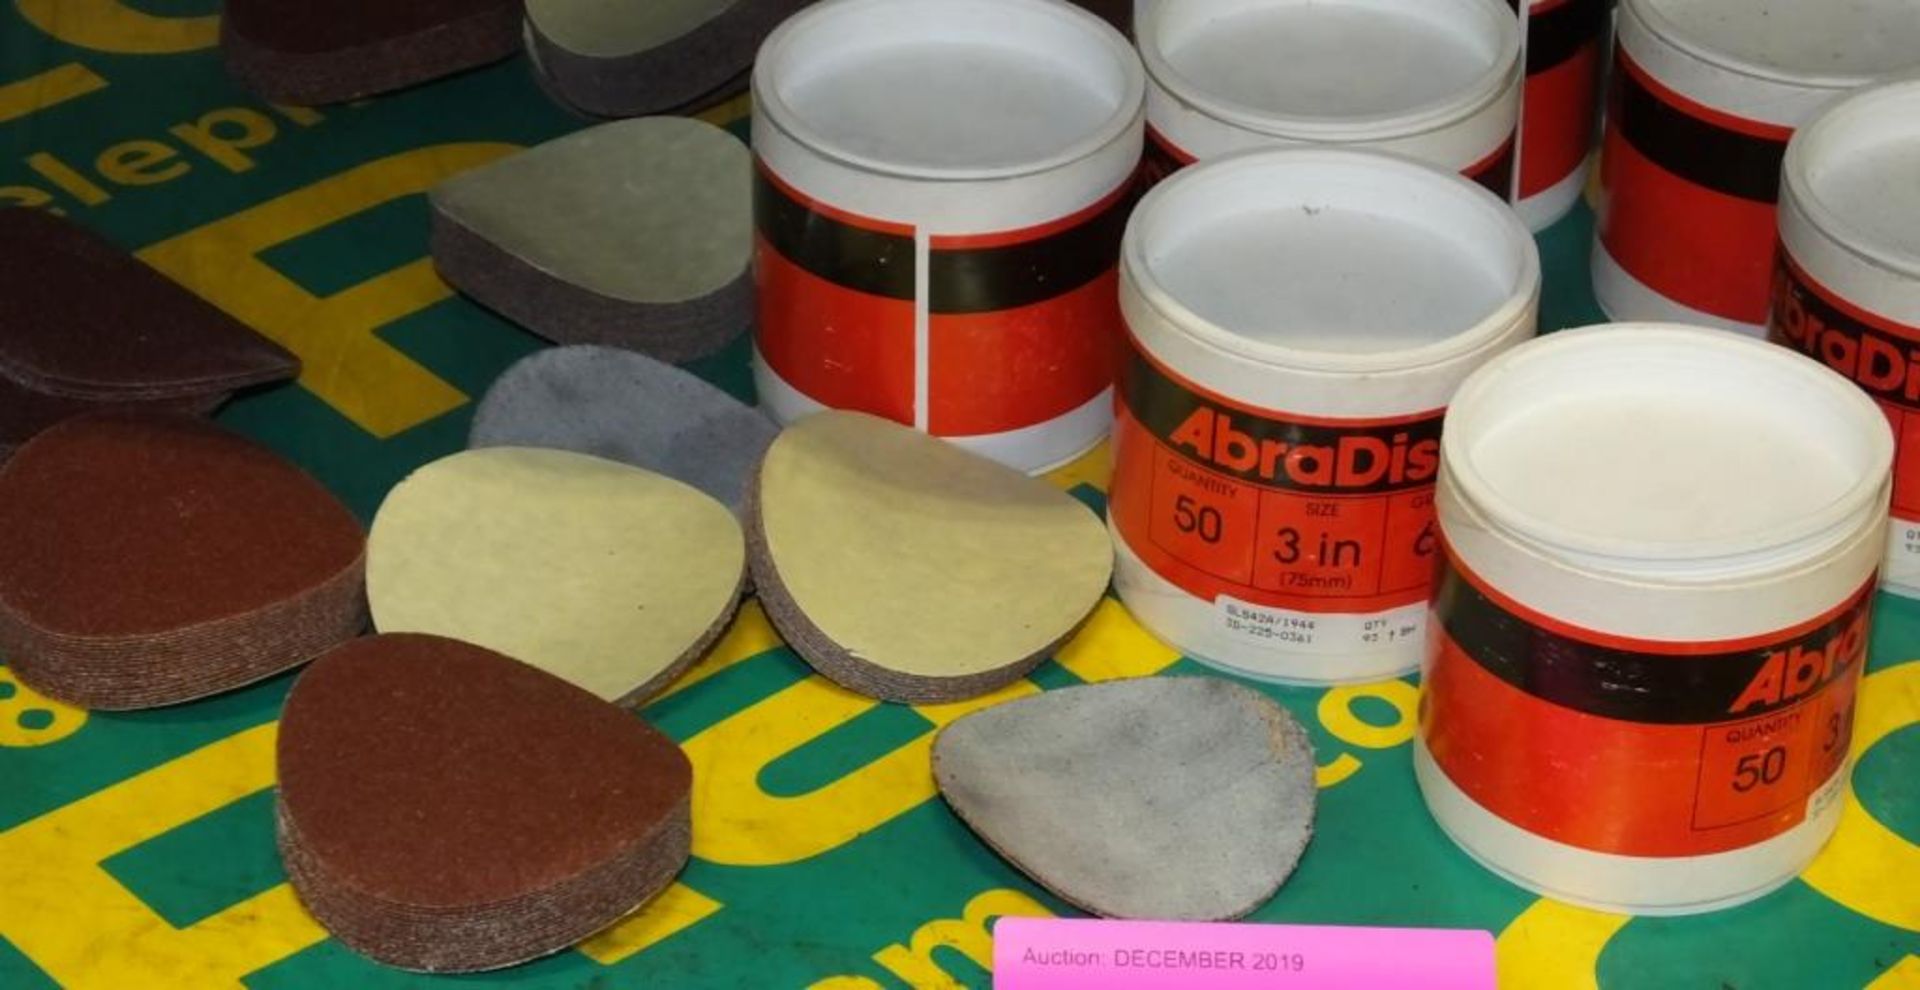 Abradisc Sanding Discs - Size 75mm Grit Size 60 - Image 2 of 2